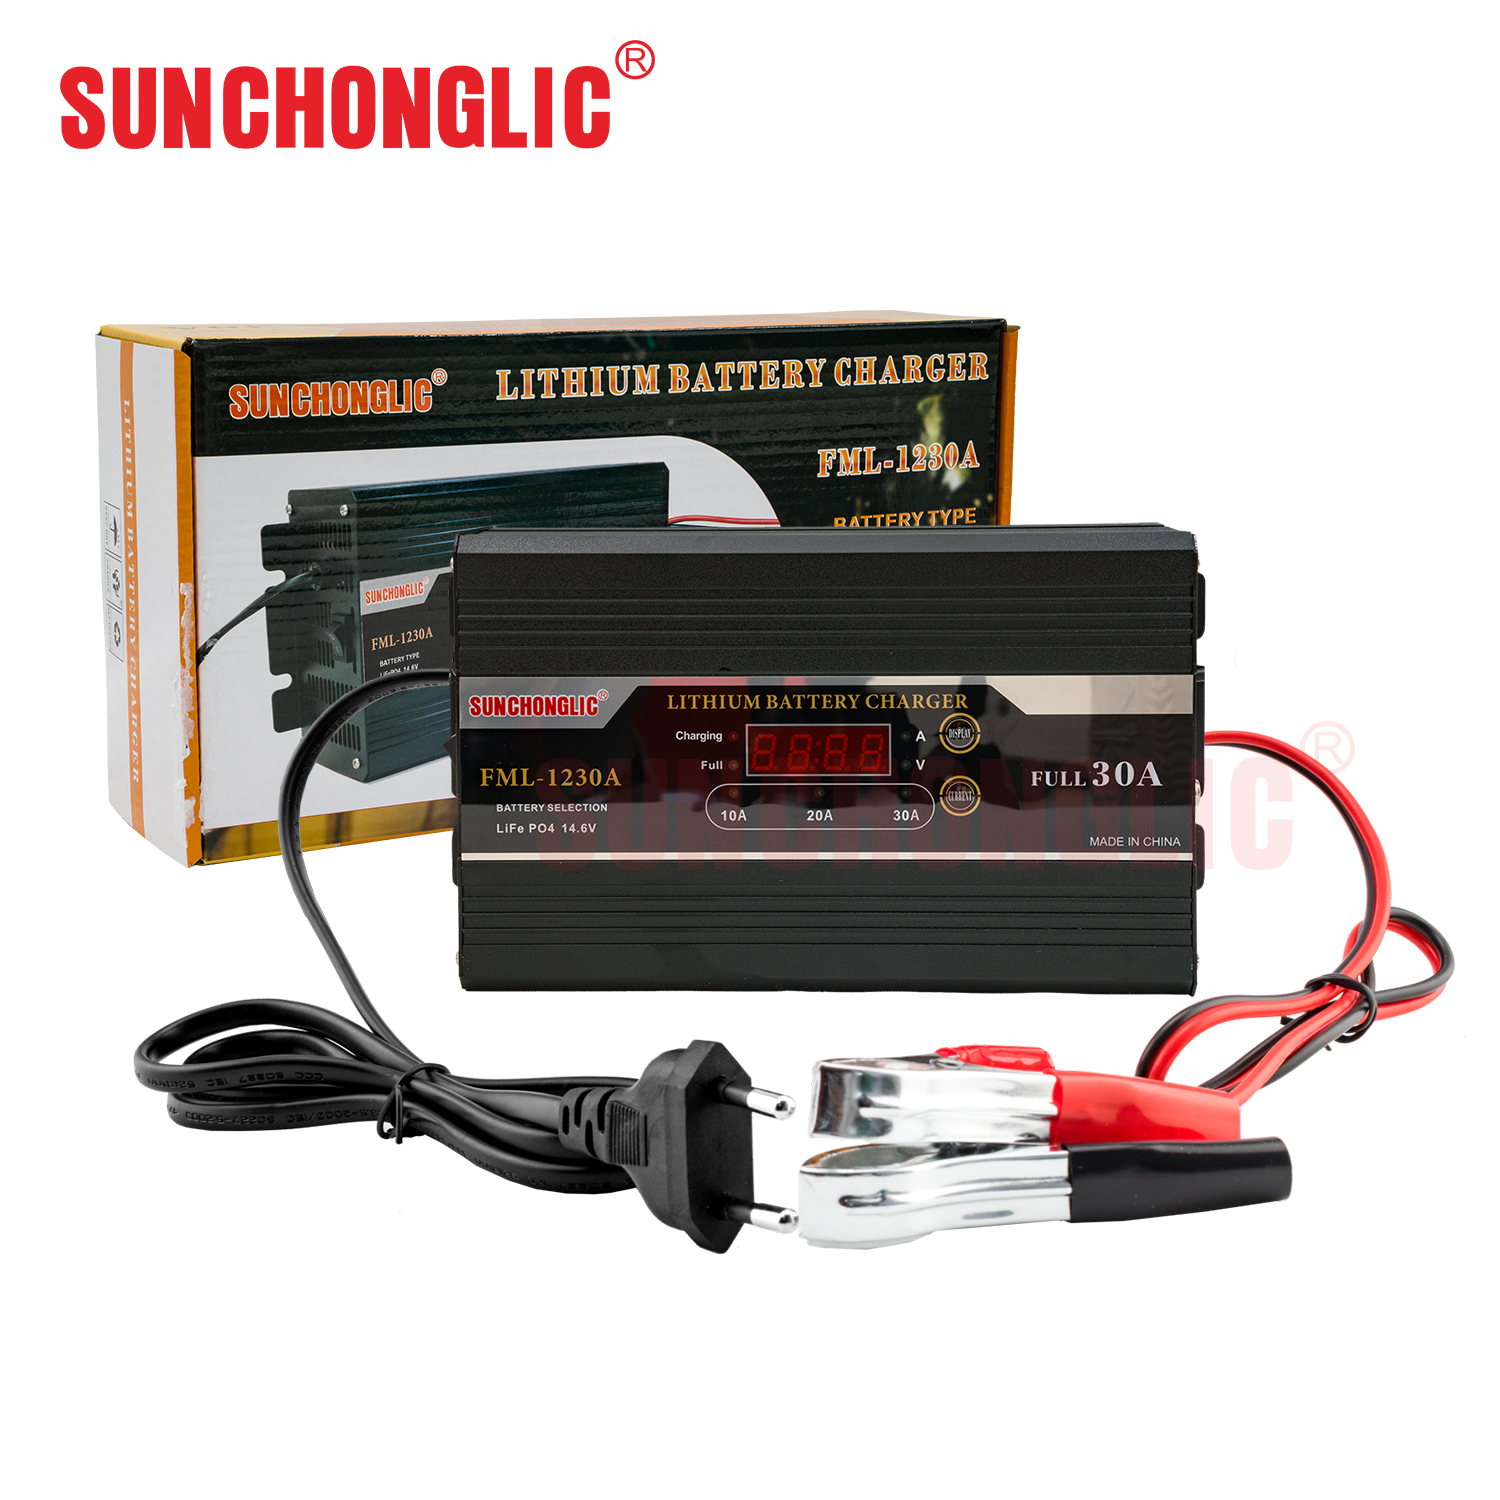 Sunchonglic 12V 30A smart digital display lithium battery charger